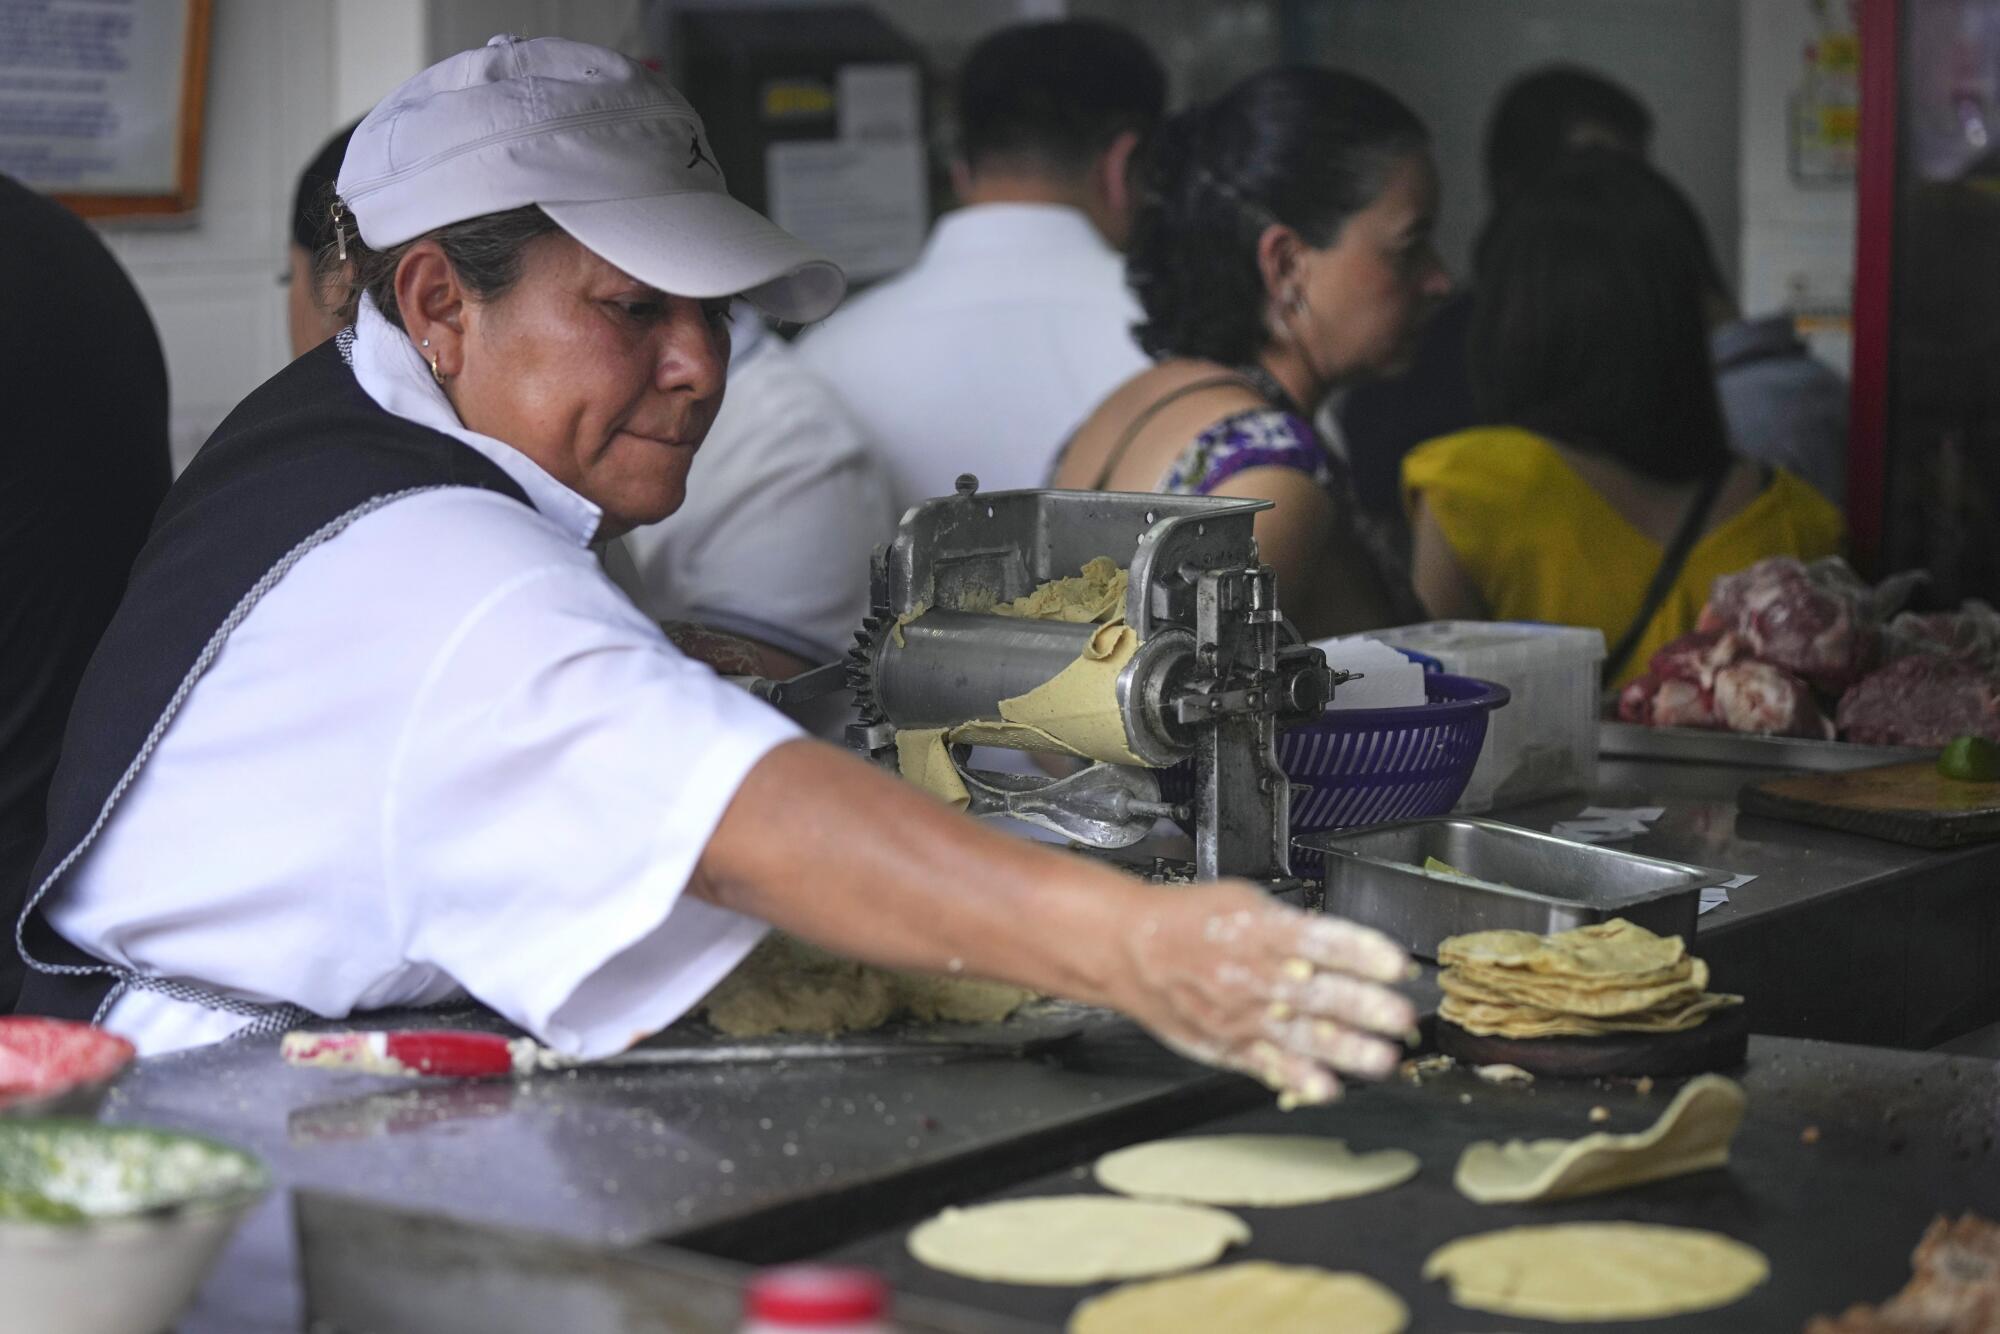 An employee puts a tortilla on a comal at El Califa in León.